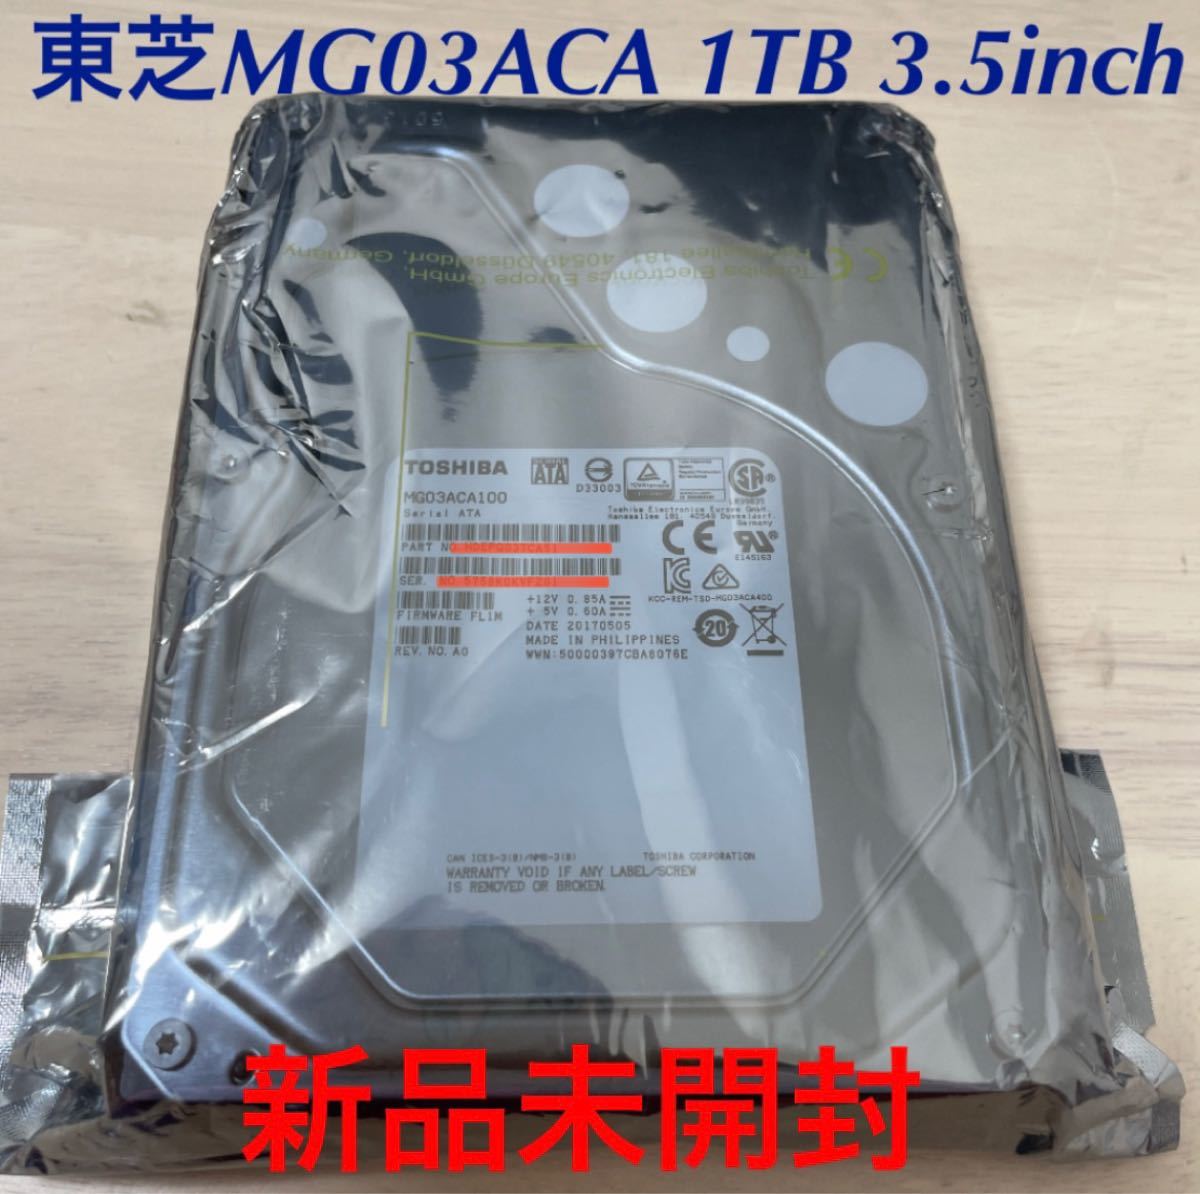 東芝 HDD 3.5インチ MG03ACA100 [1TB SATA600 7200] 新品未開封